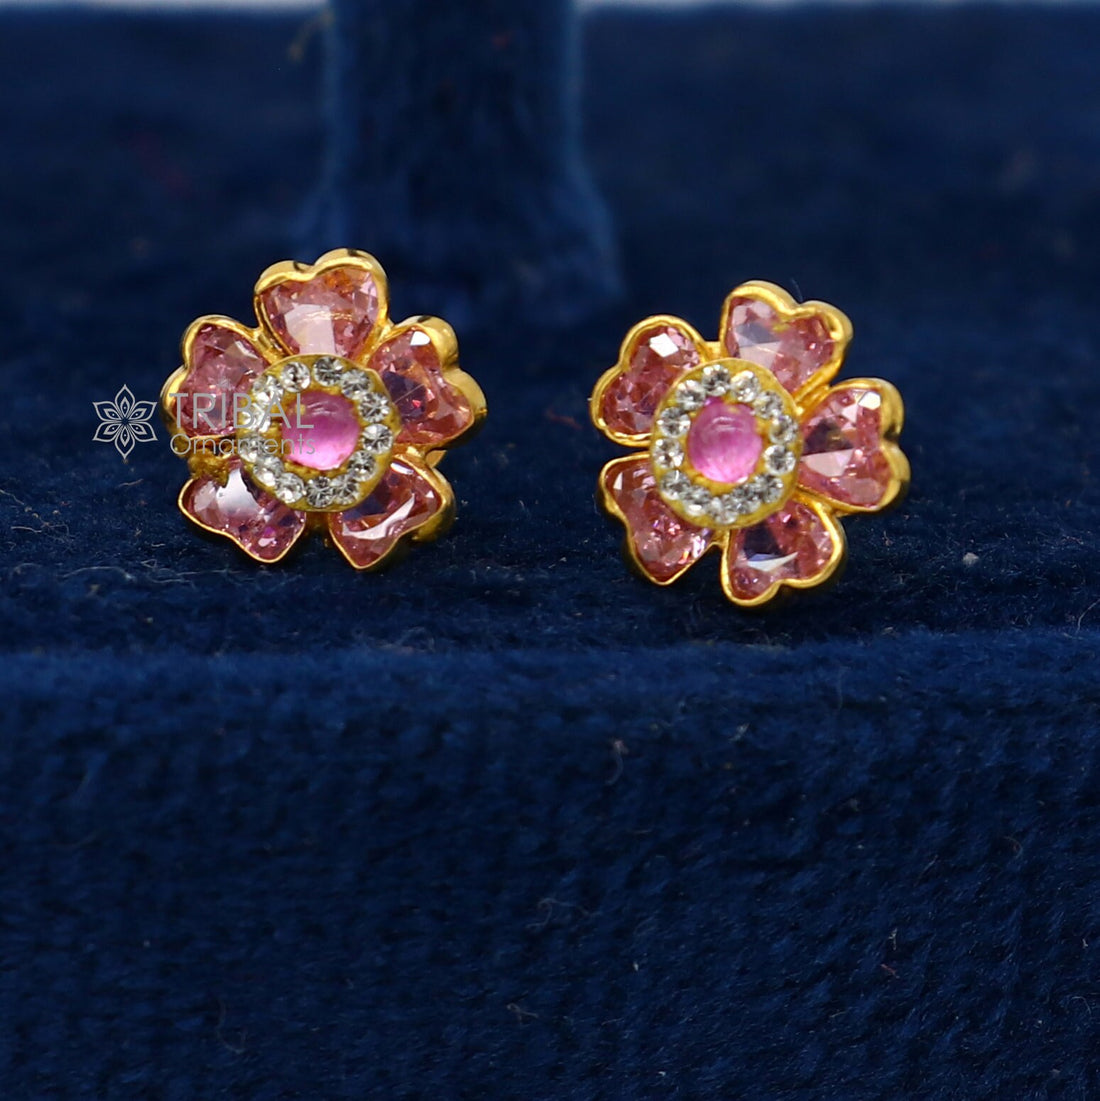 14kt yellow gold handmade fabulous orange Stone excellent vintage flower design stud earrings pair unisex jewelry er176 - TRIBAL ORNAMENTS